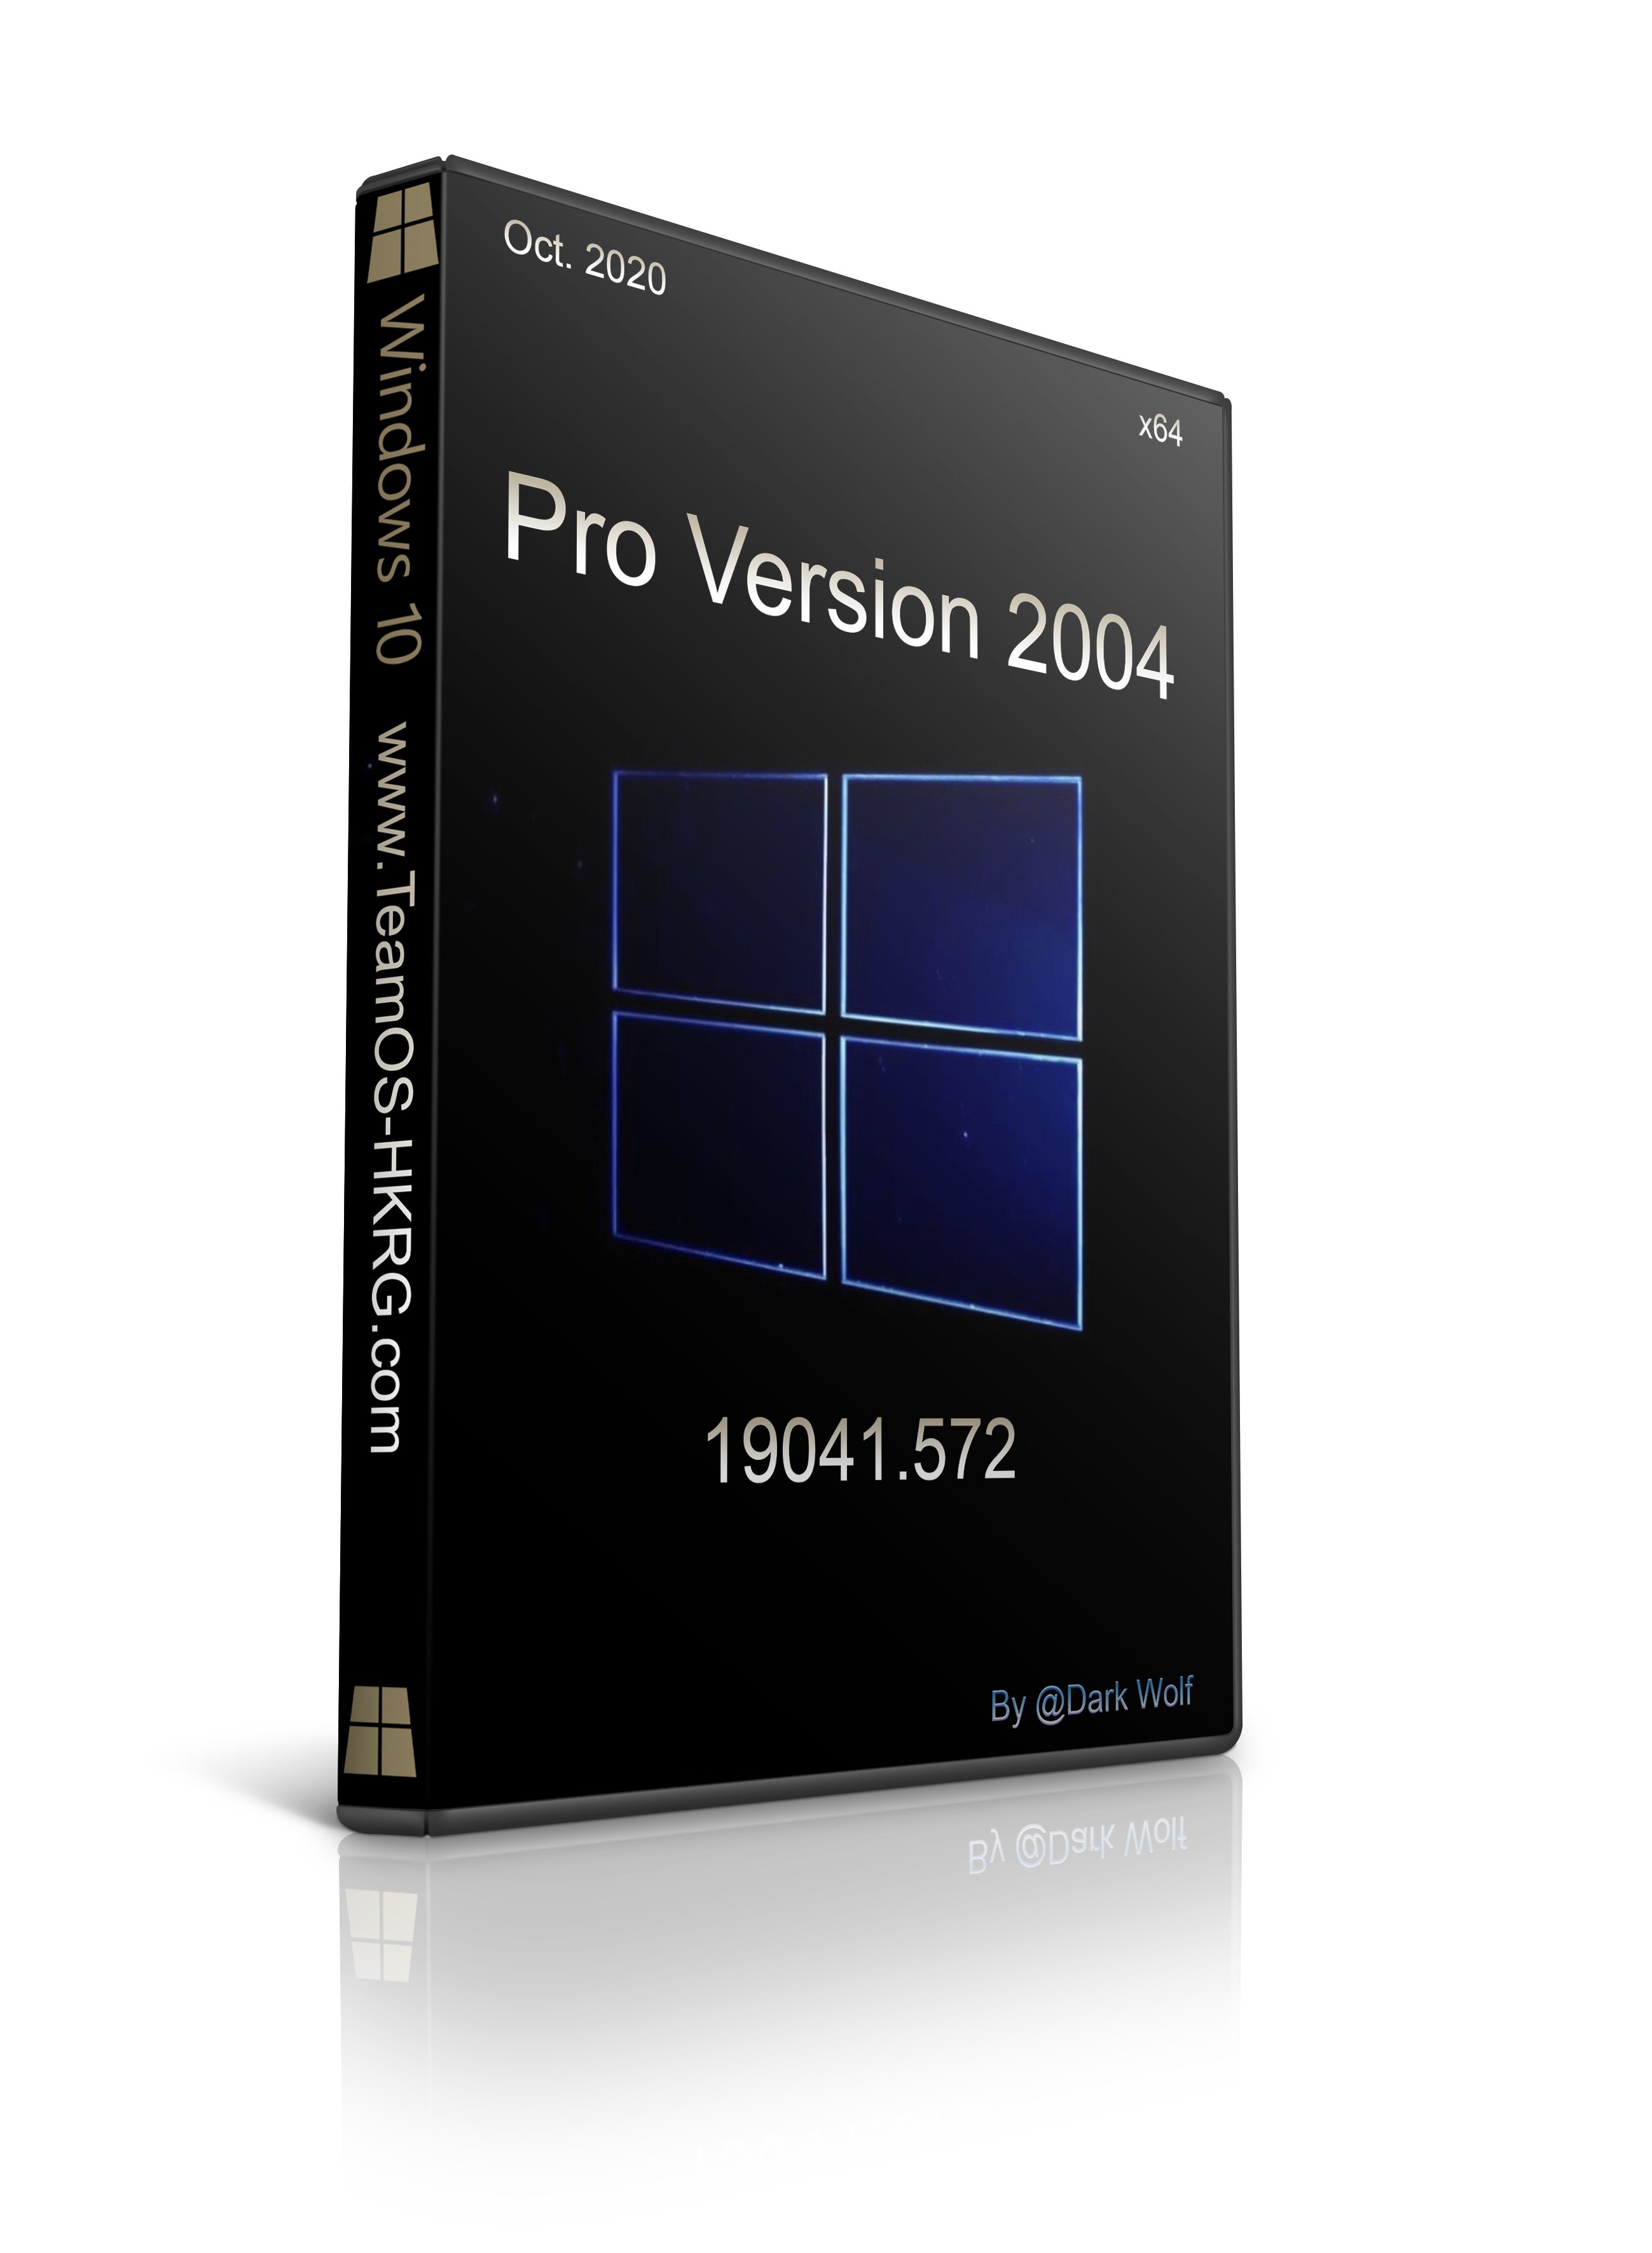 download windows 10 pro 2004